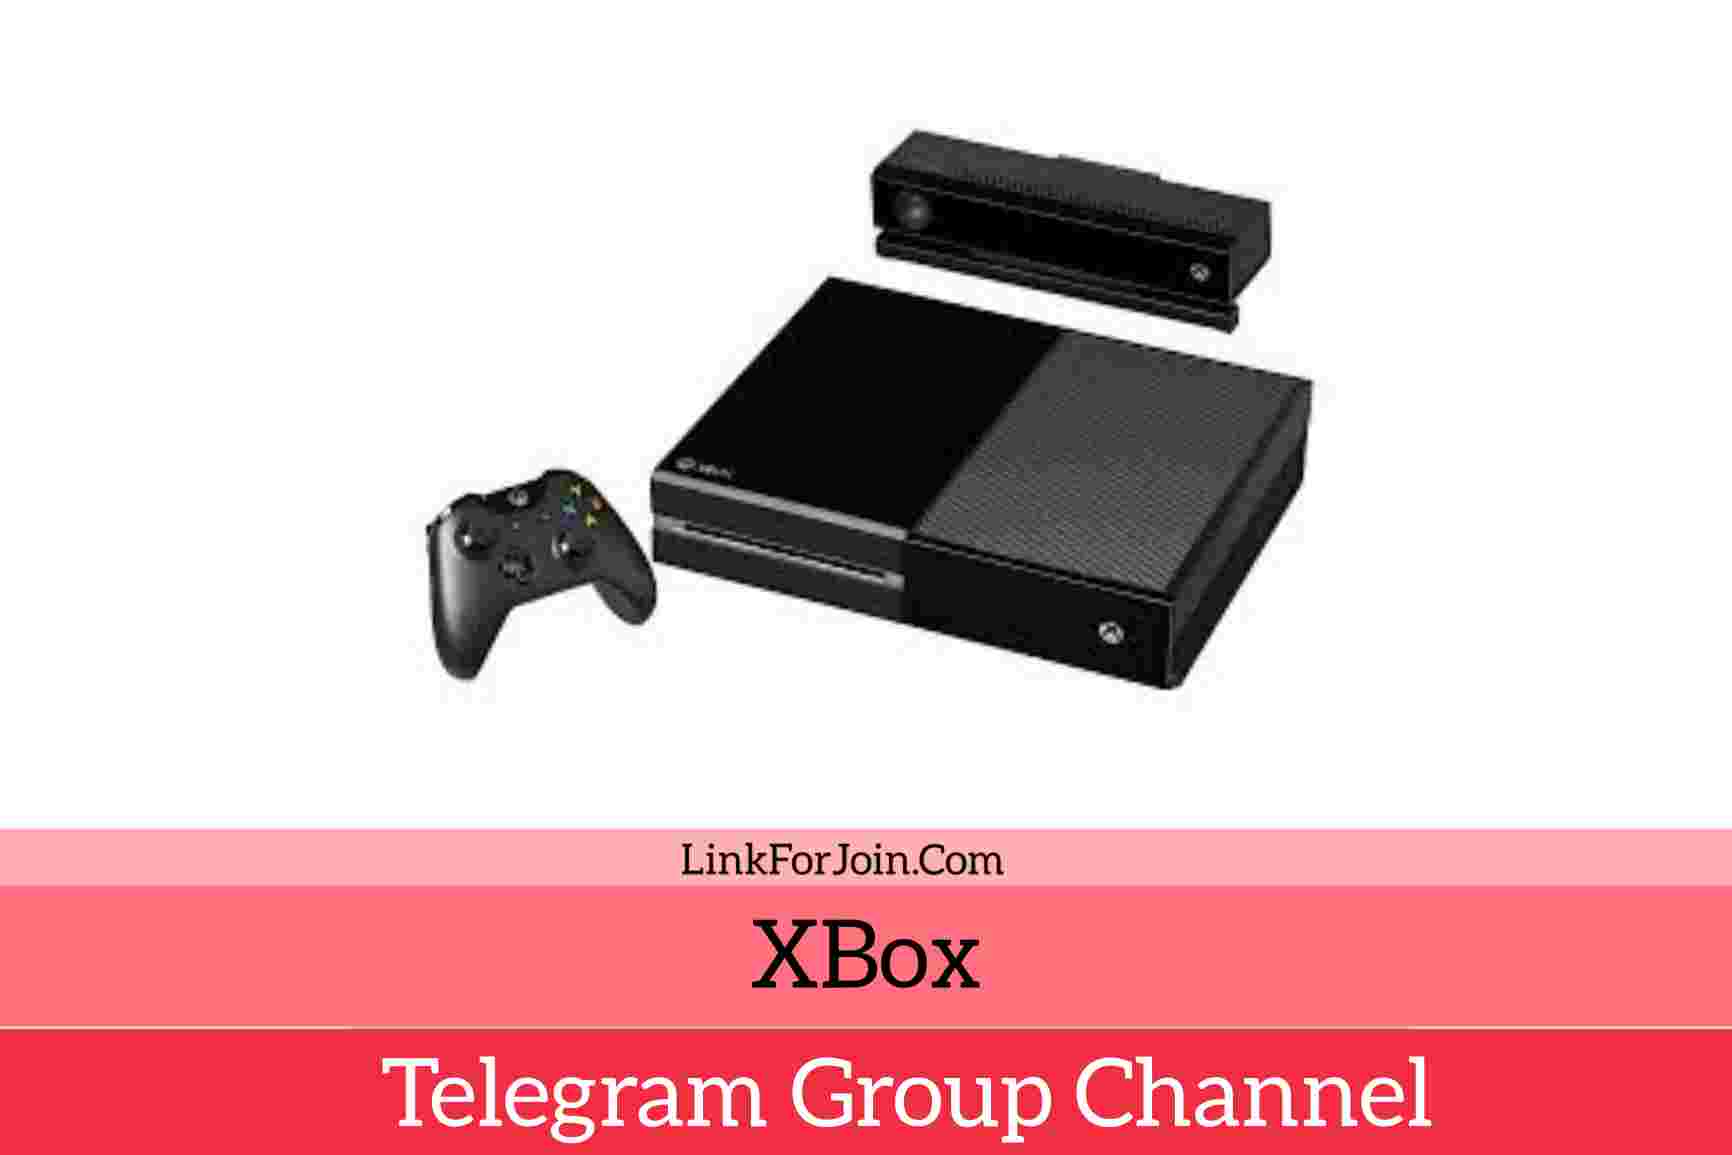 Xbox Telegram Group & Channel